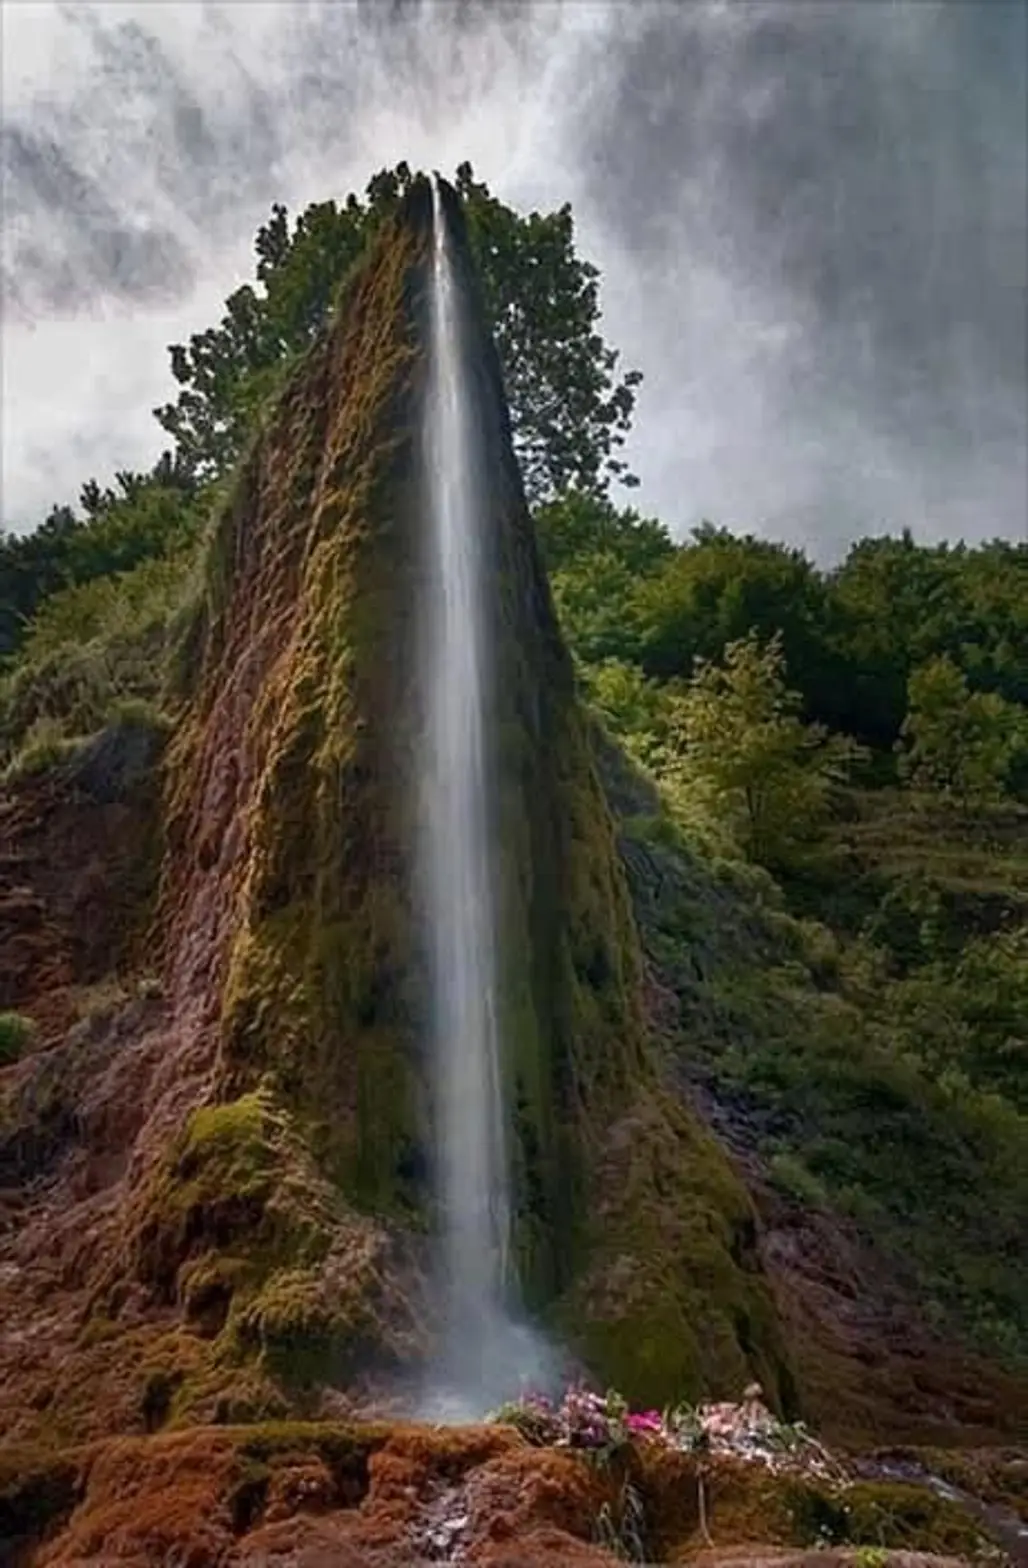 Prskalo Waterfall, Serbia